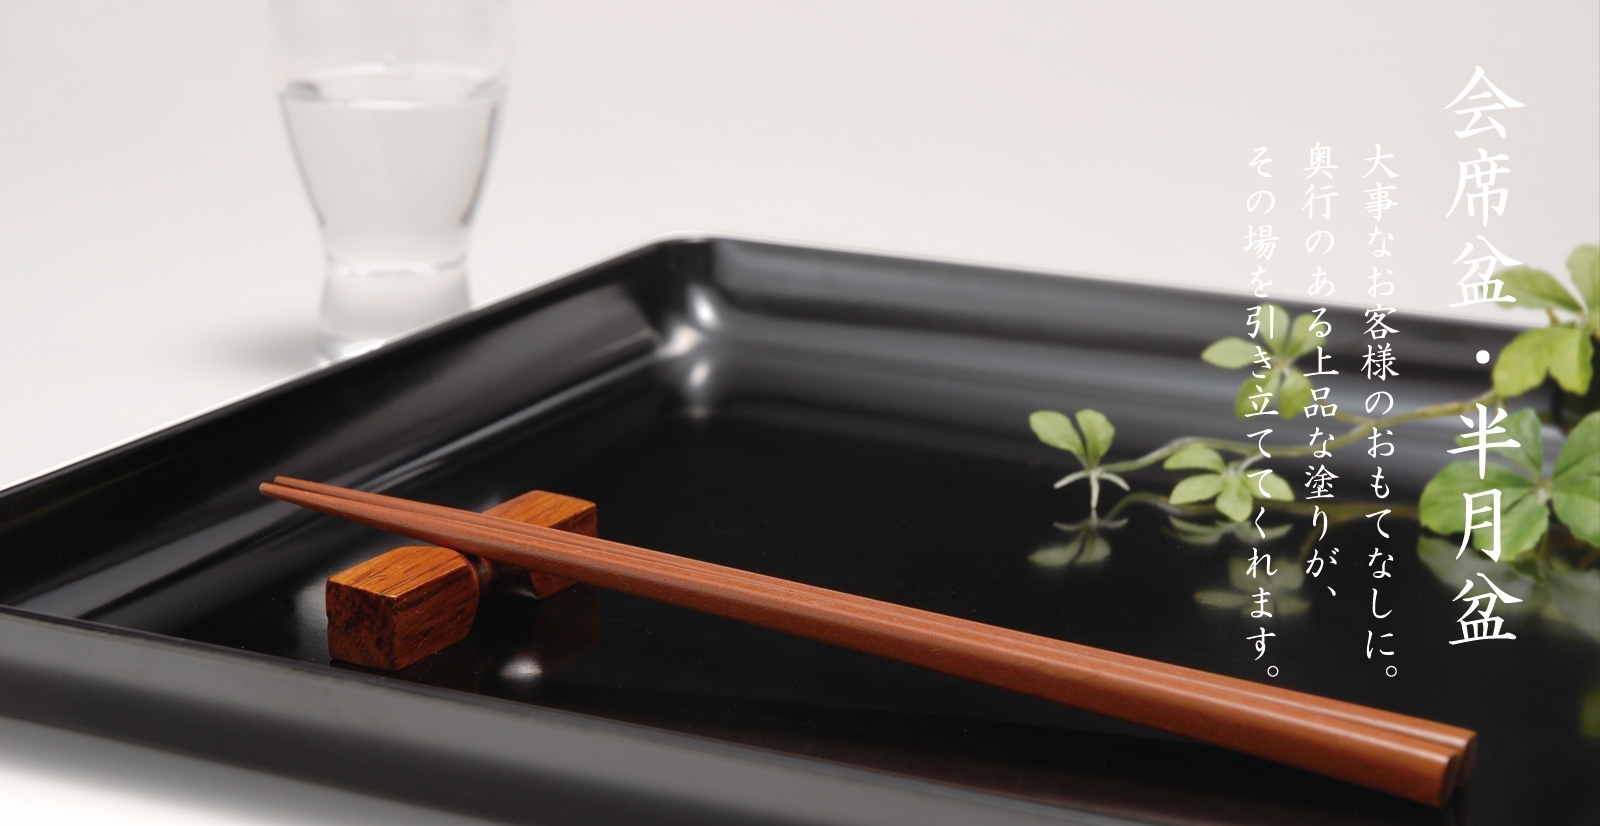 Tatsu-craft(タツクラフト) 紀州塗り 会席膳の商品画像3 